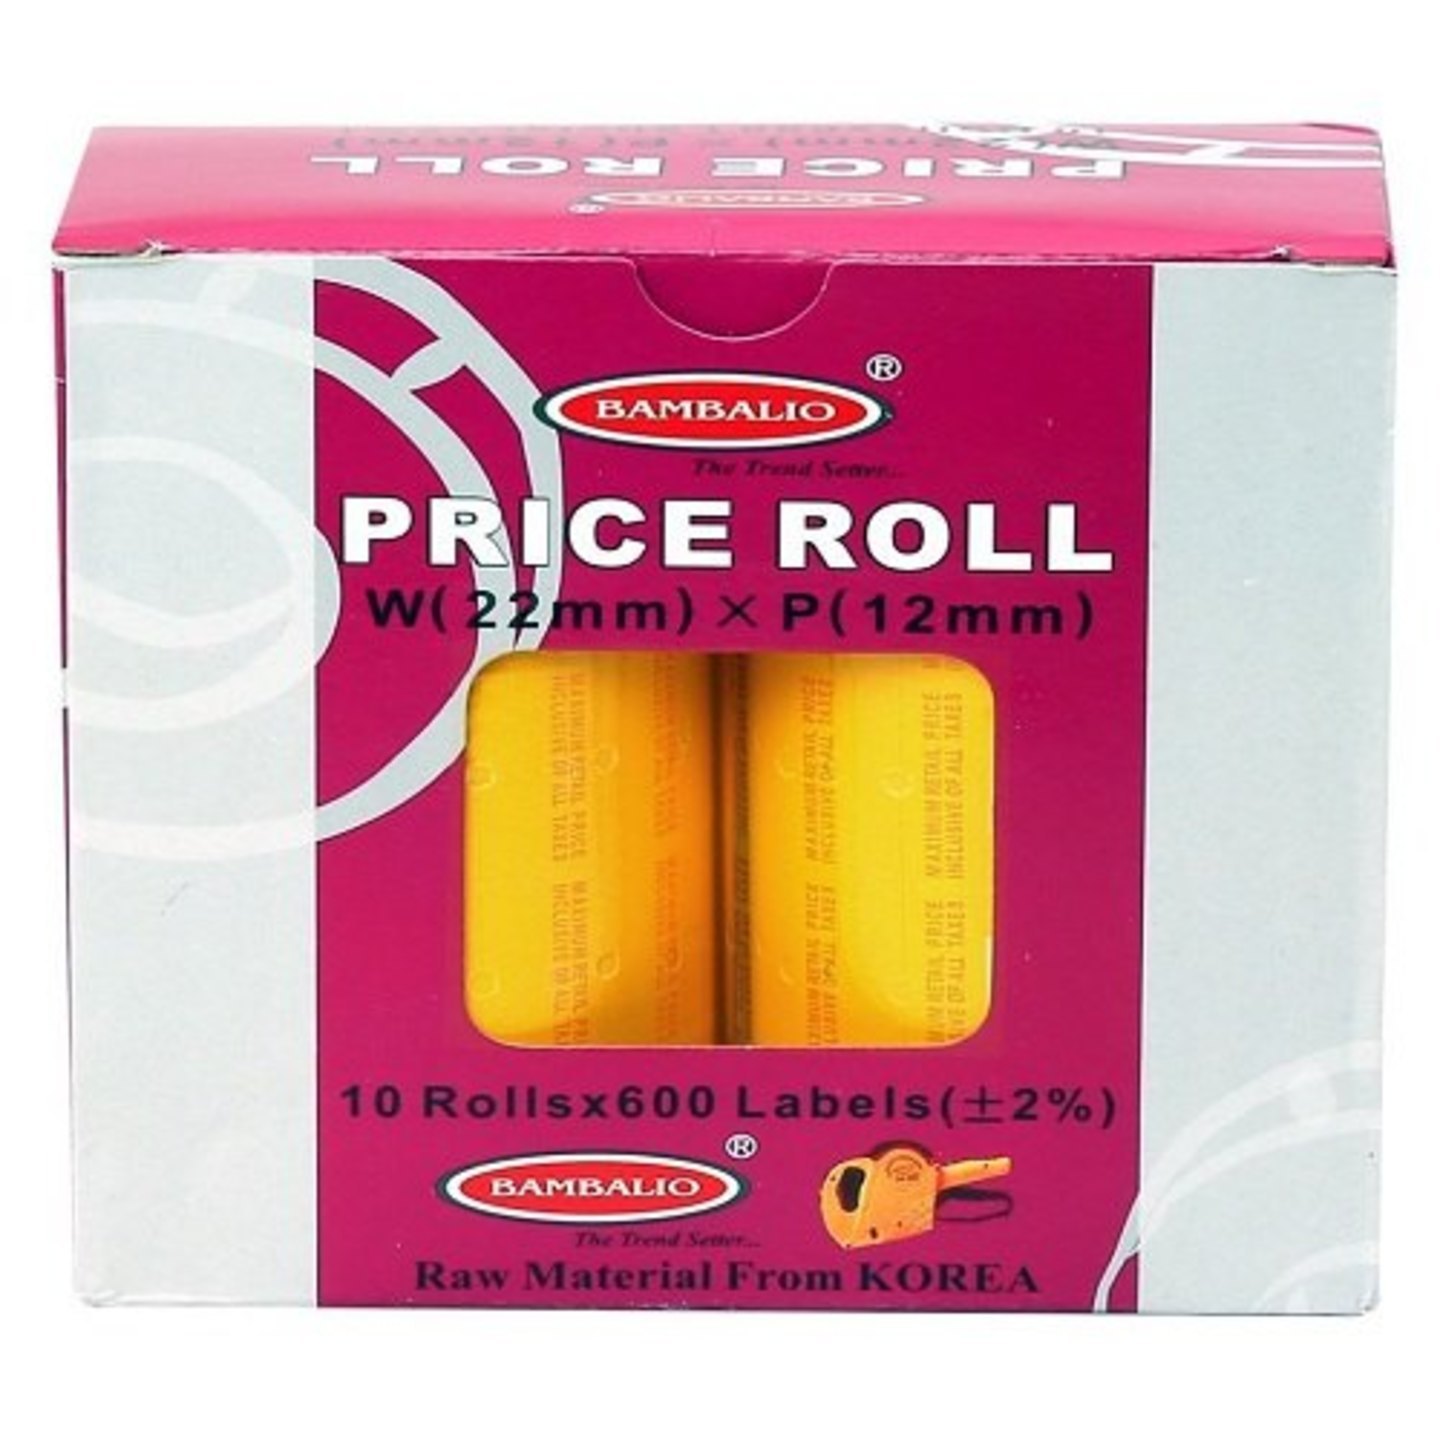 Bambalio Price Label (10 rolls)